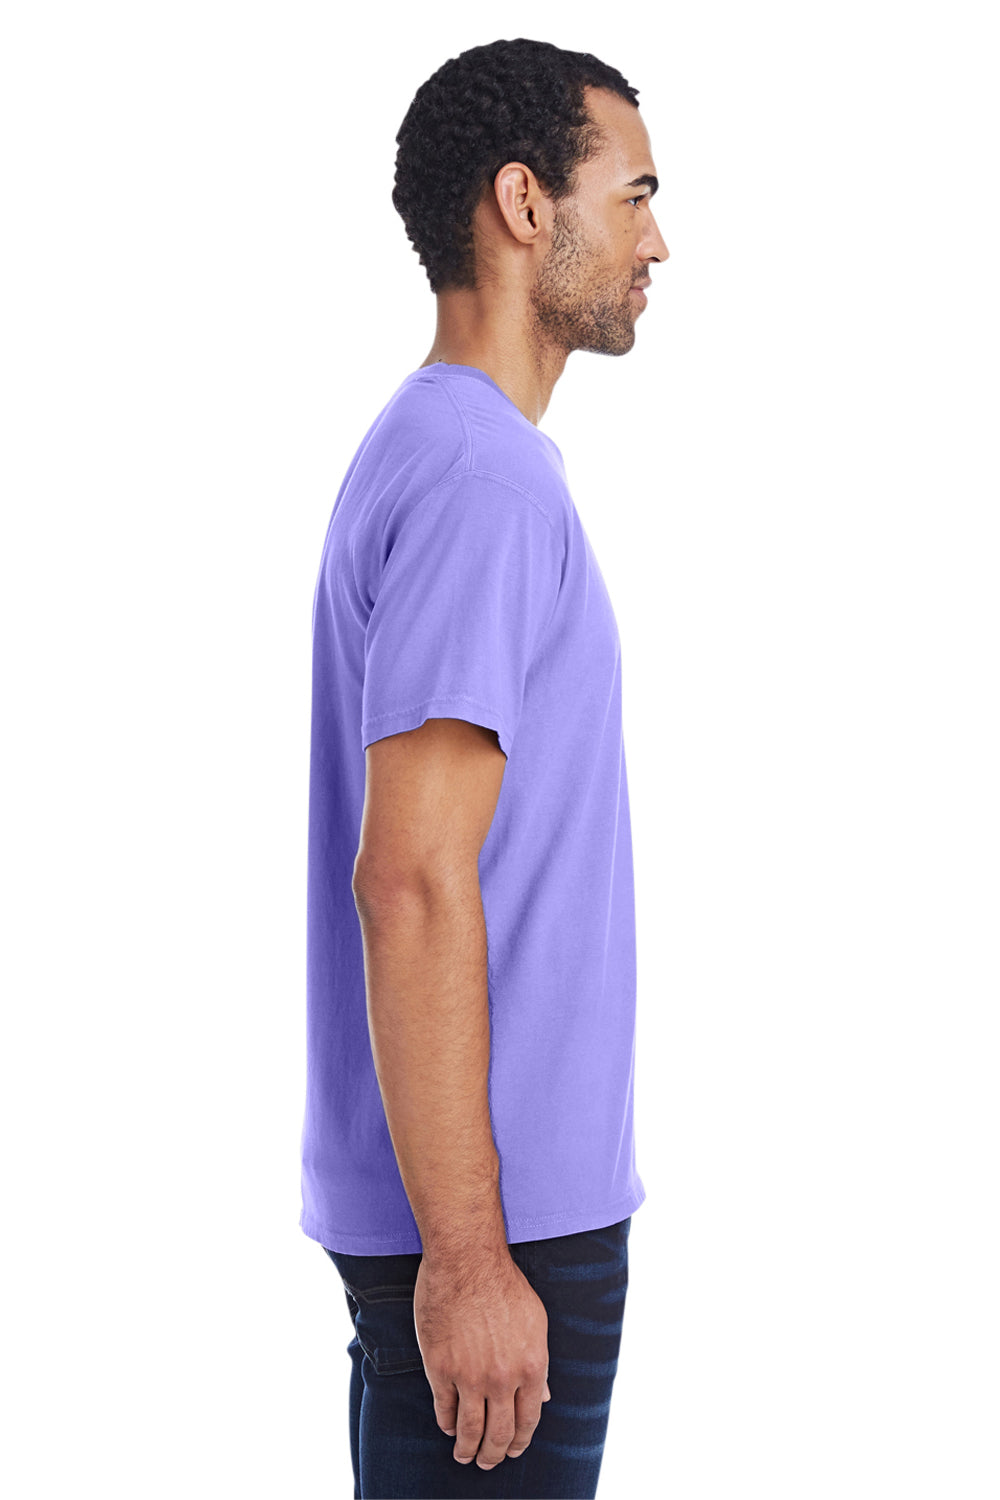 ComfortWash by Hanes GDH150 Short Sleeve Crewneck T-Shirt w/ Pocket Lavender Purple Side